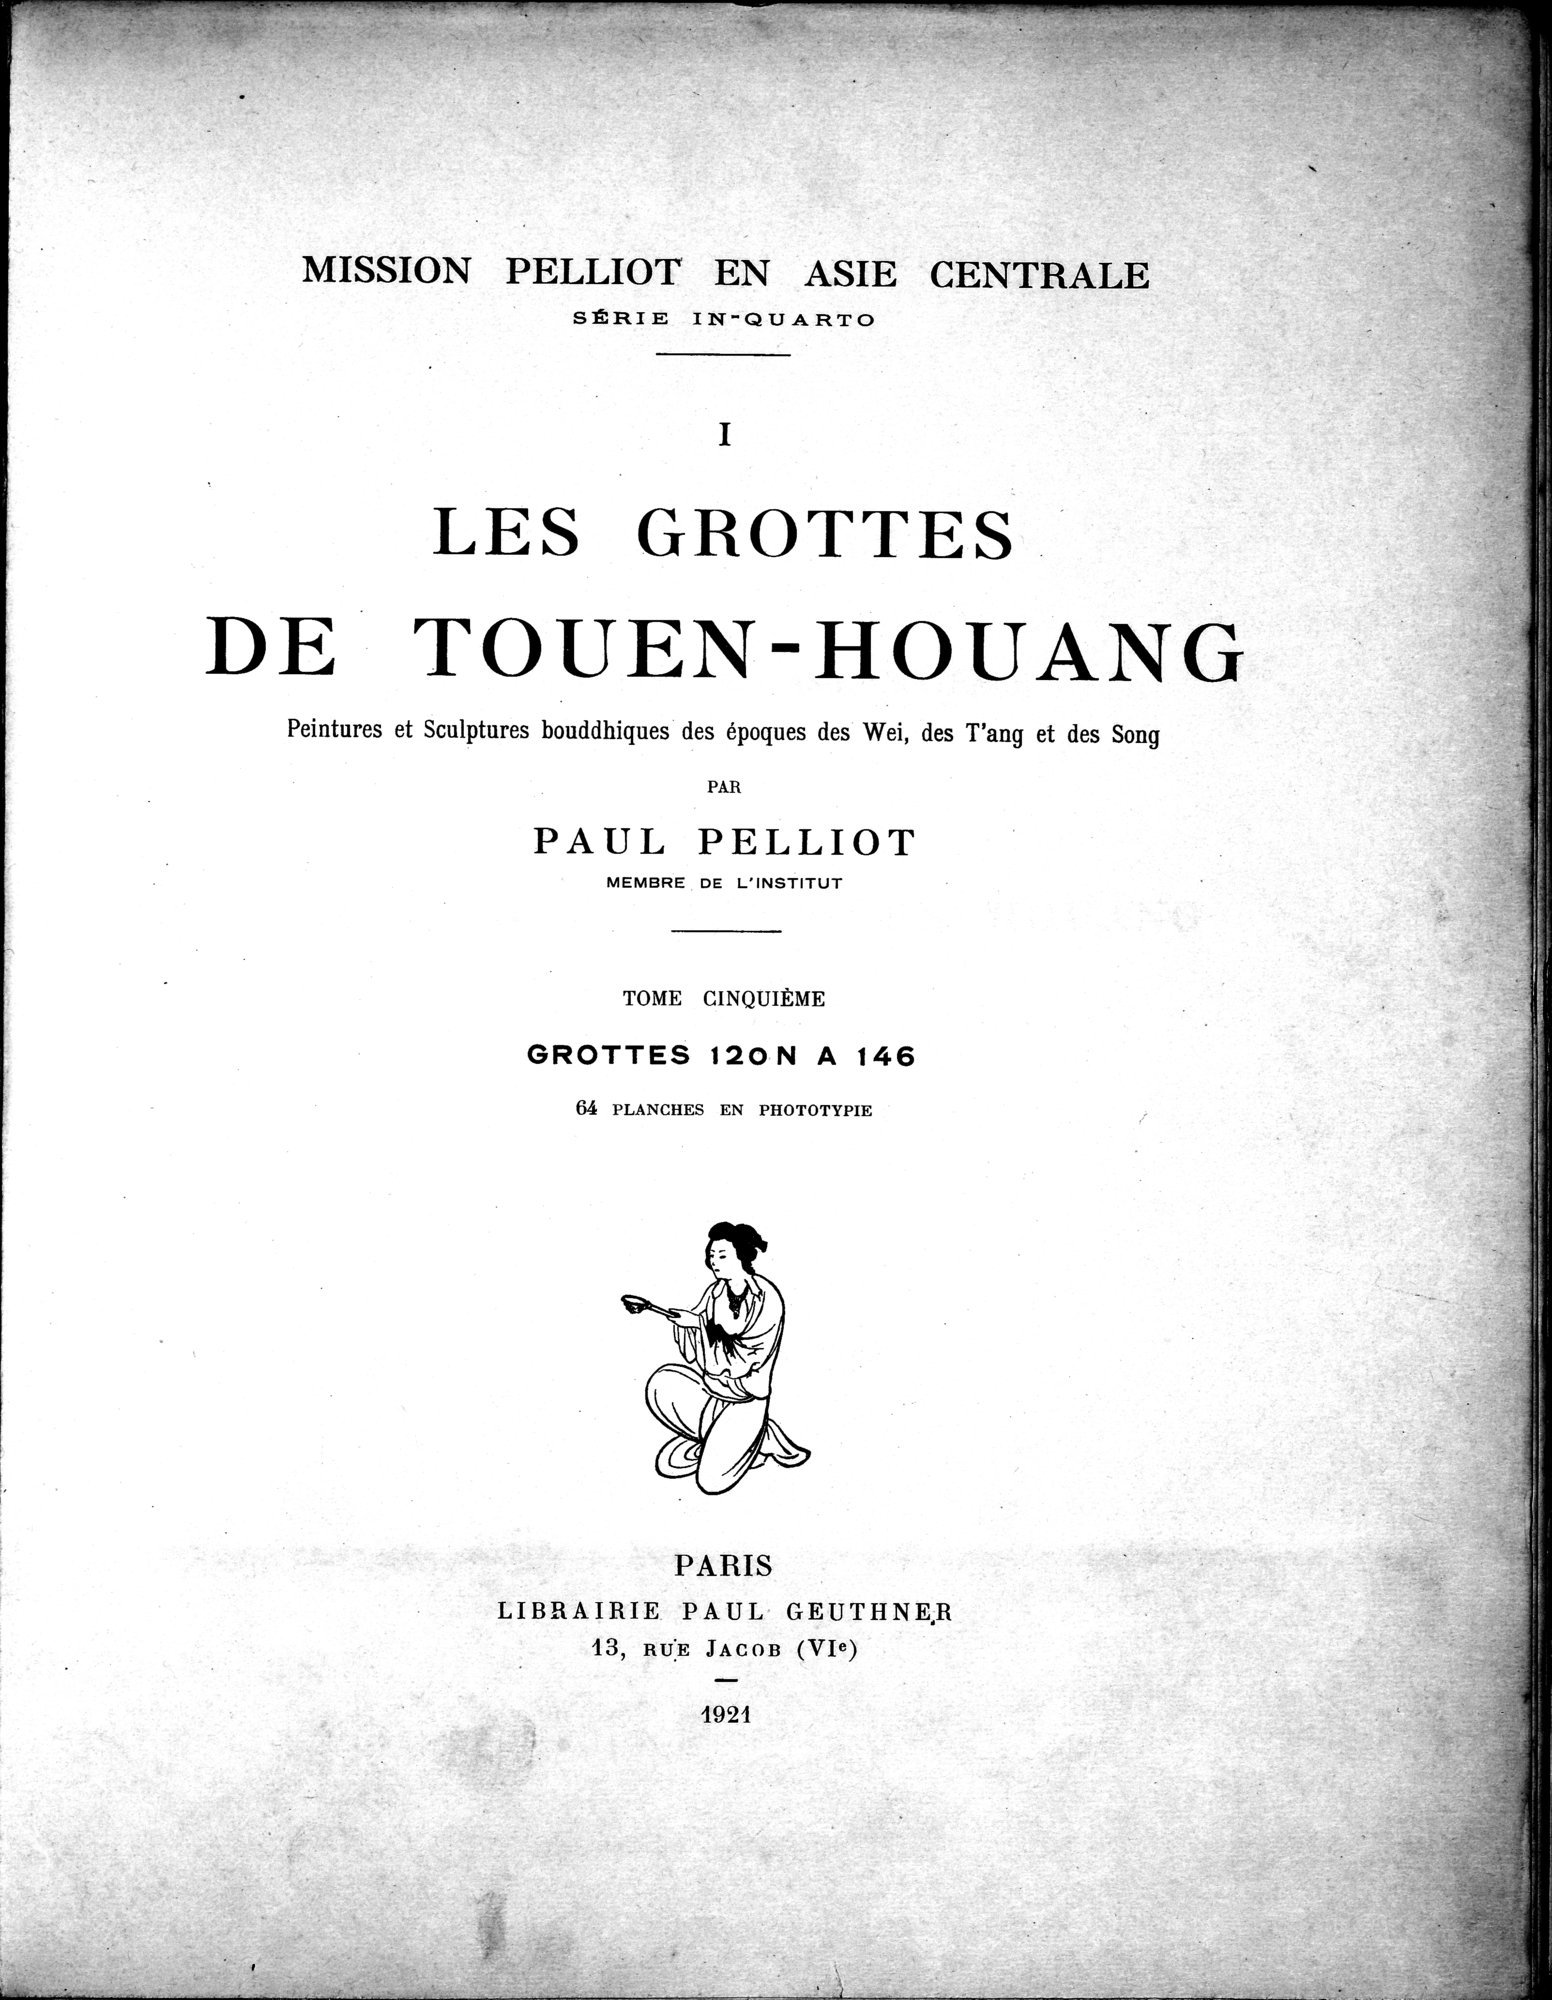 Les grottes de Touen-Houang : vol.5 / Page 3 (Grayscale High Resolution Image)